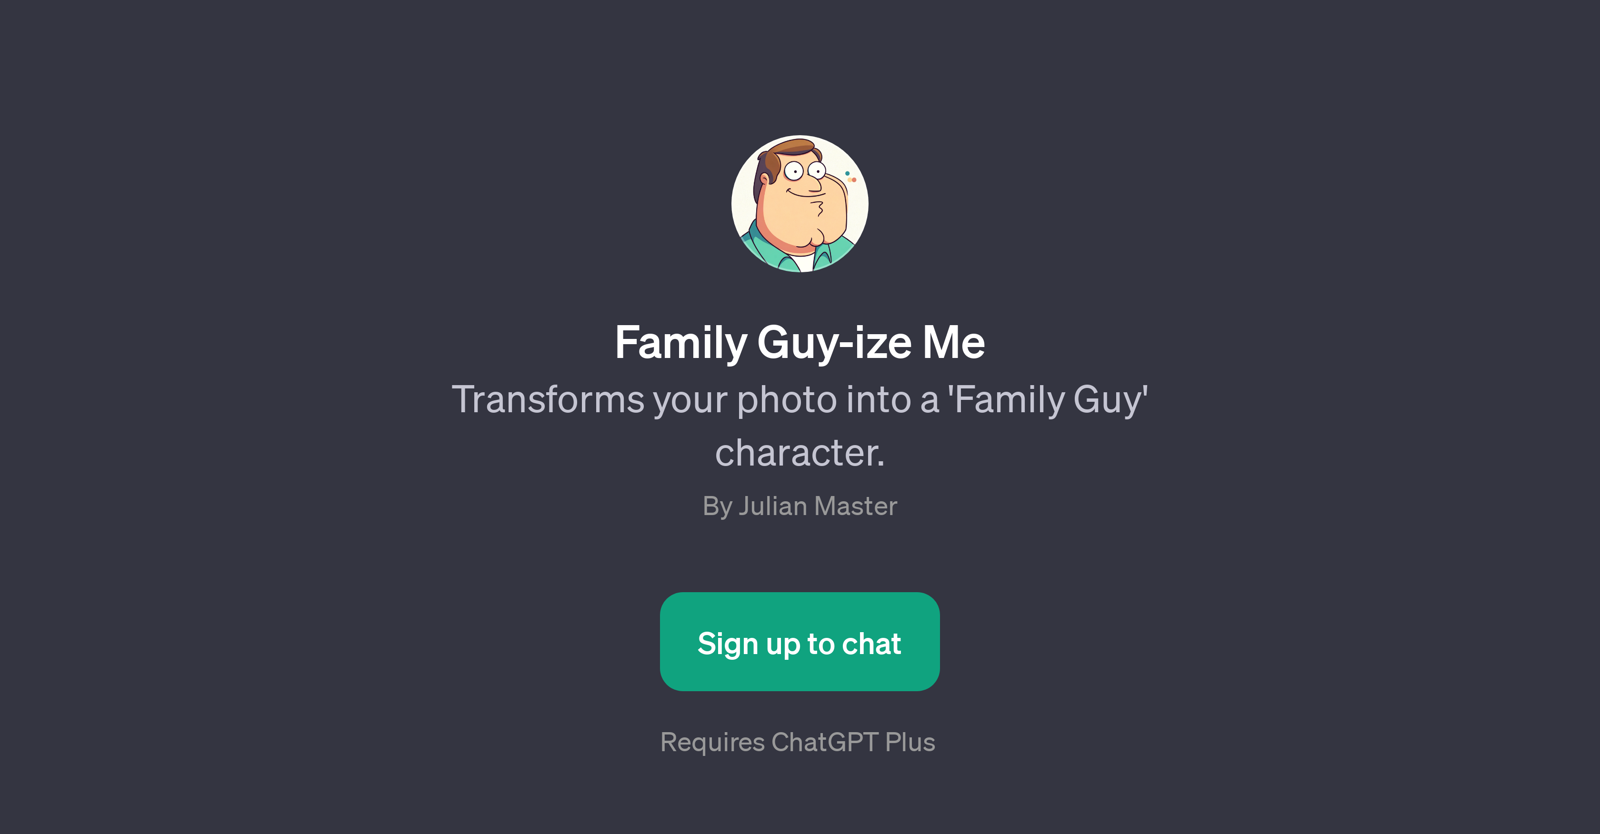 Family Guy-ize Me website